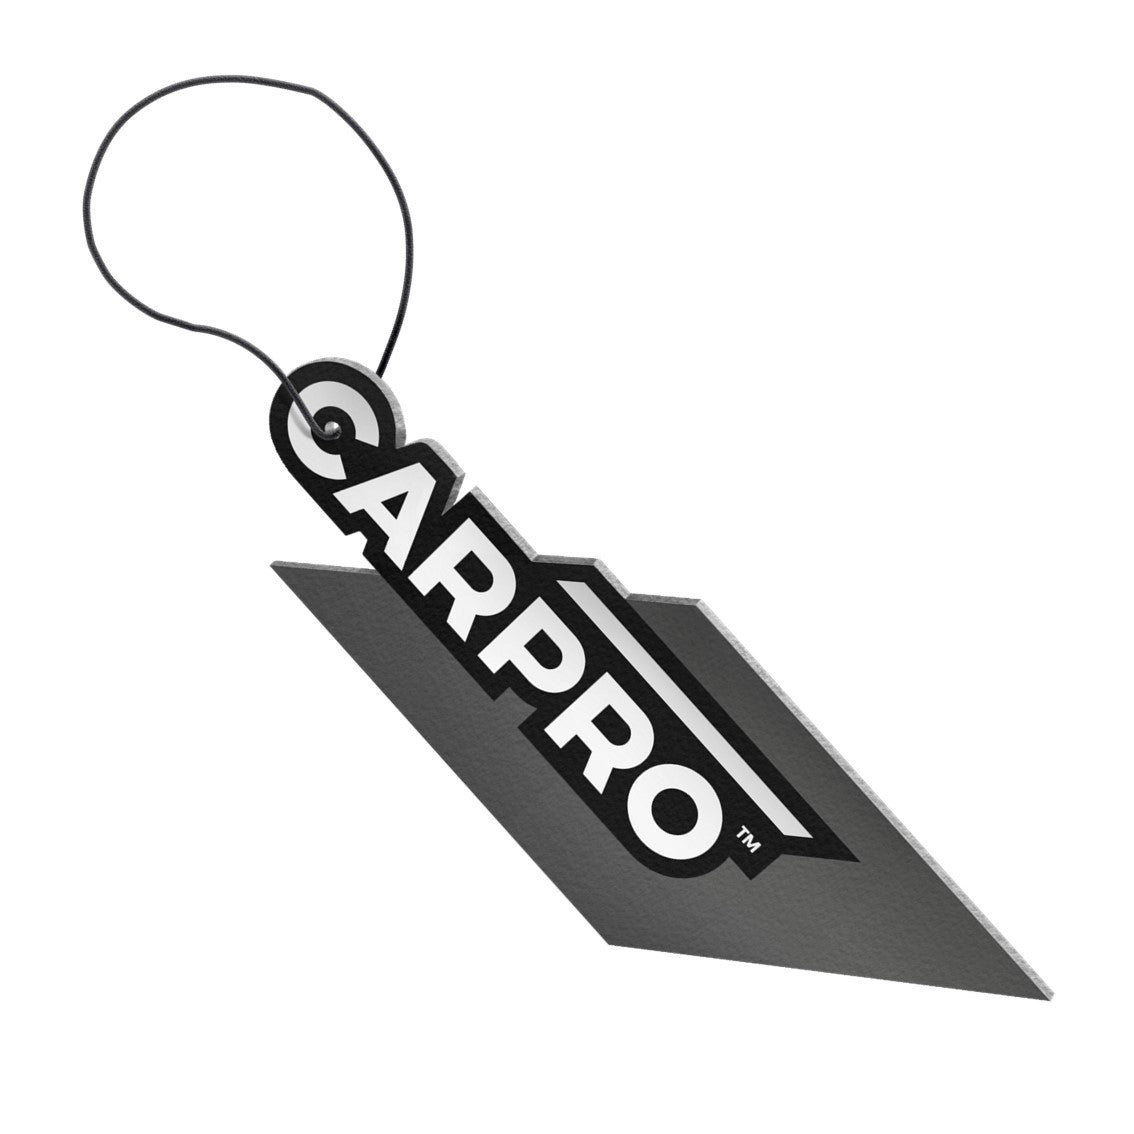 CARPRO Air freshner - Almond